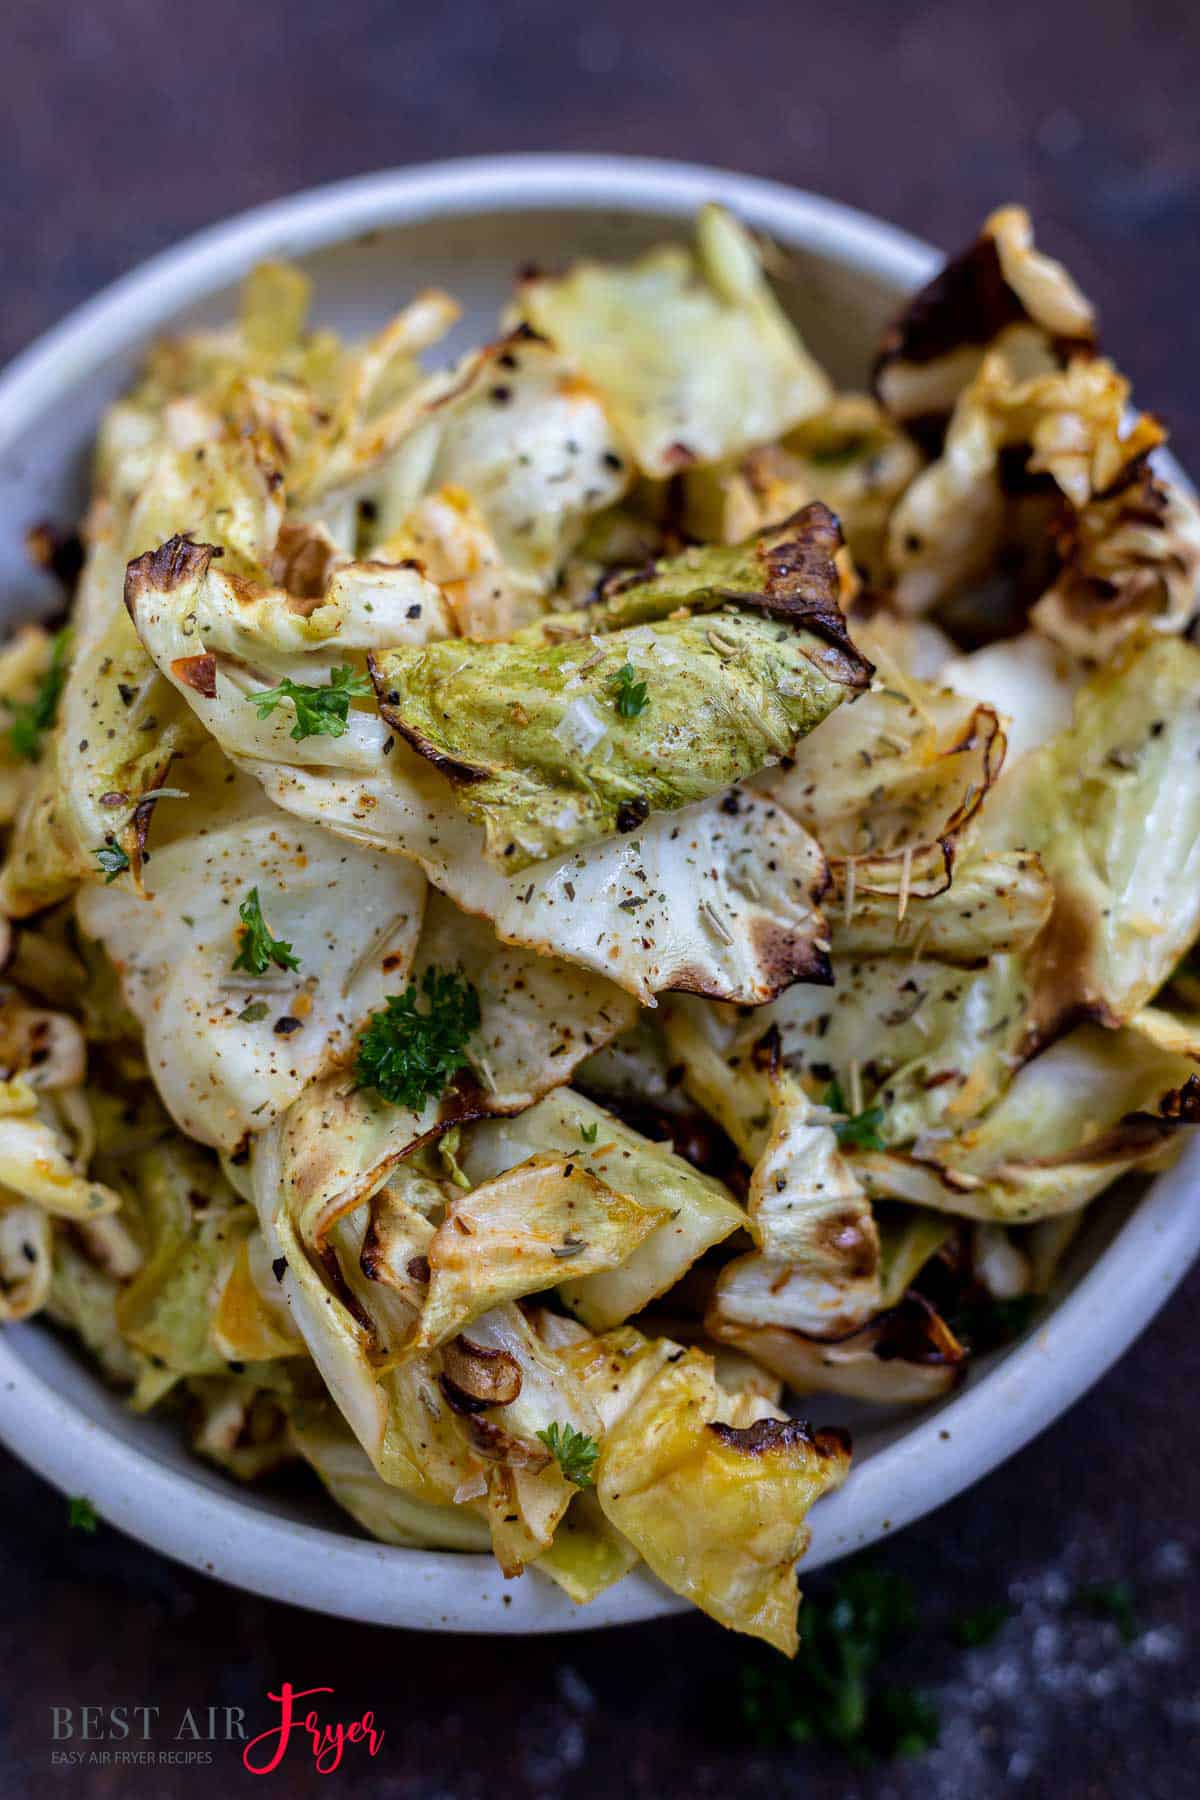 Air Fryer Cabbage Recipe